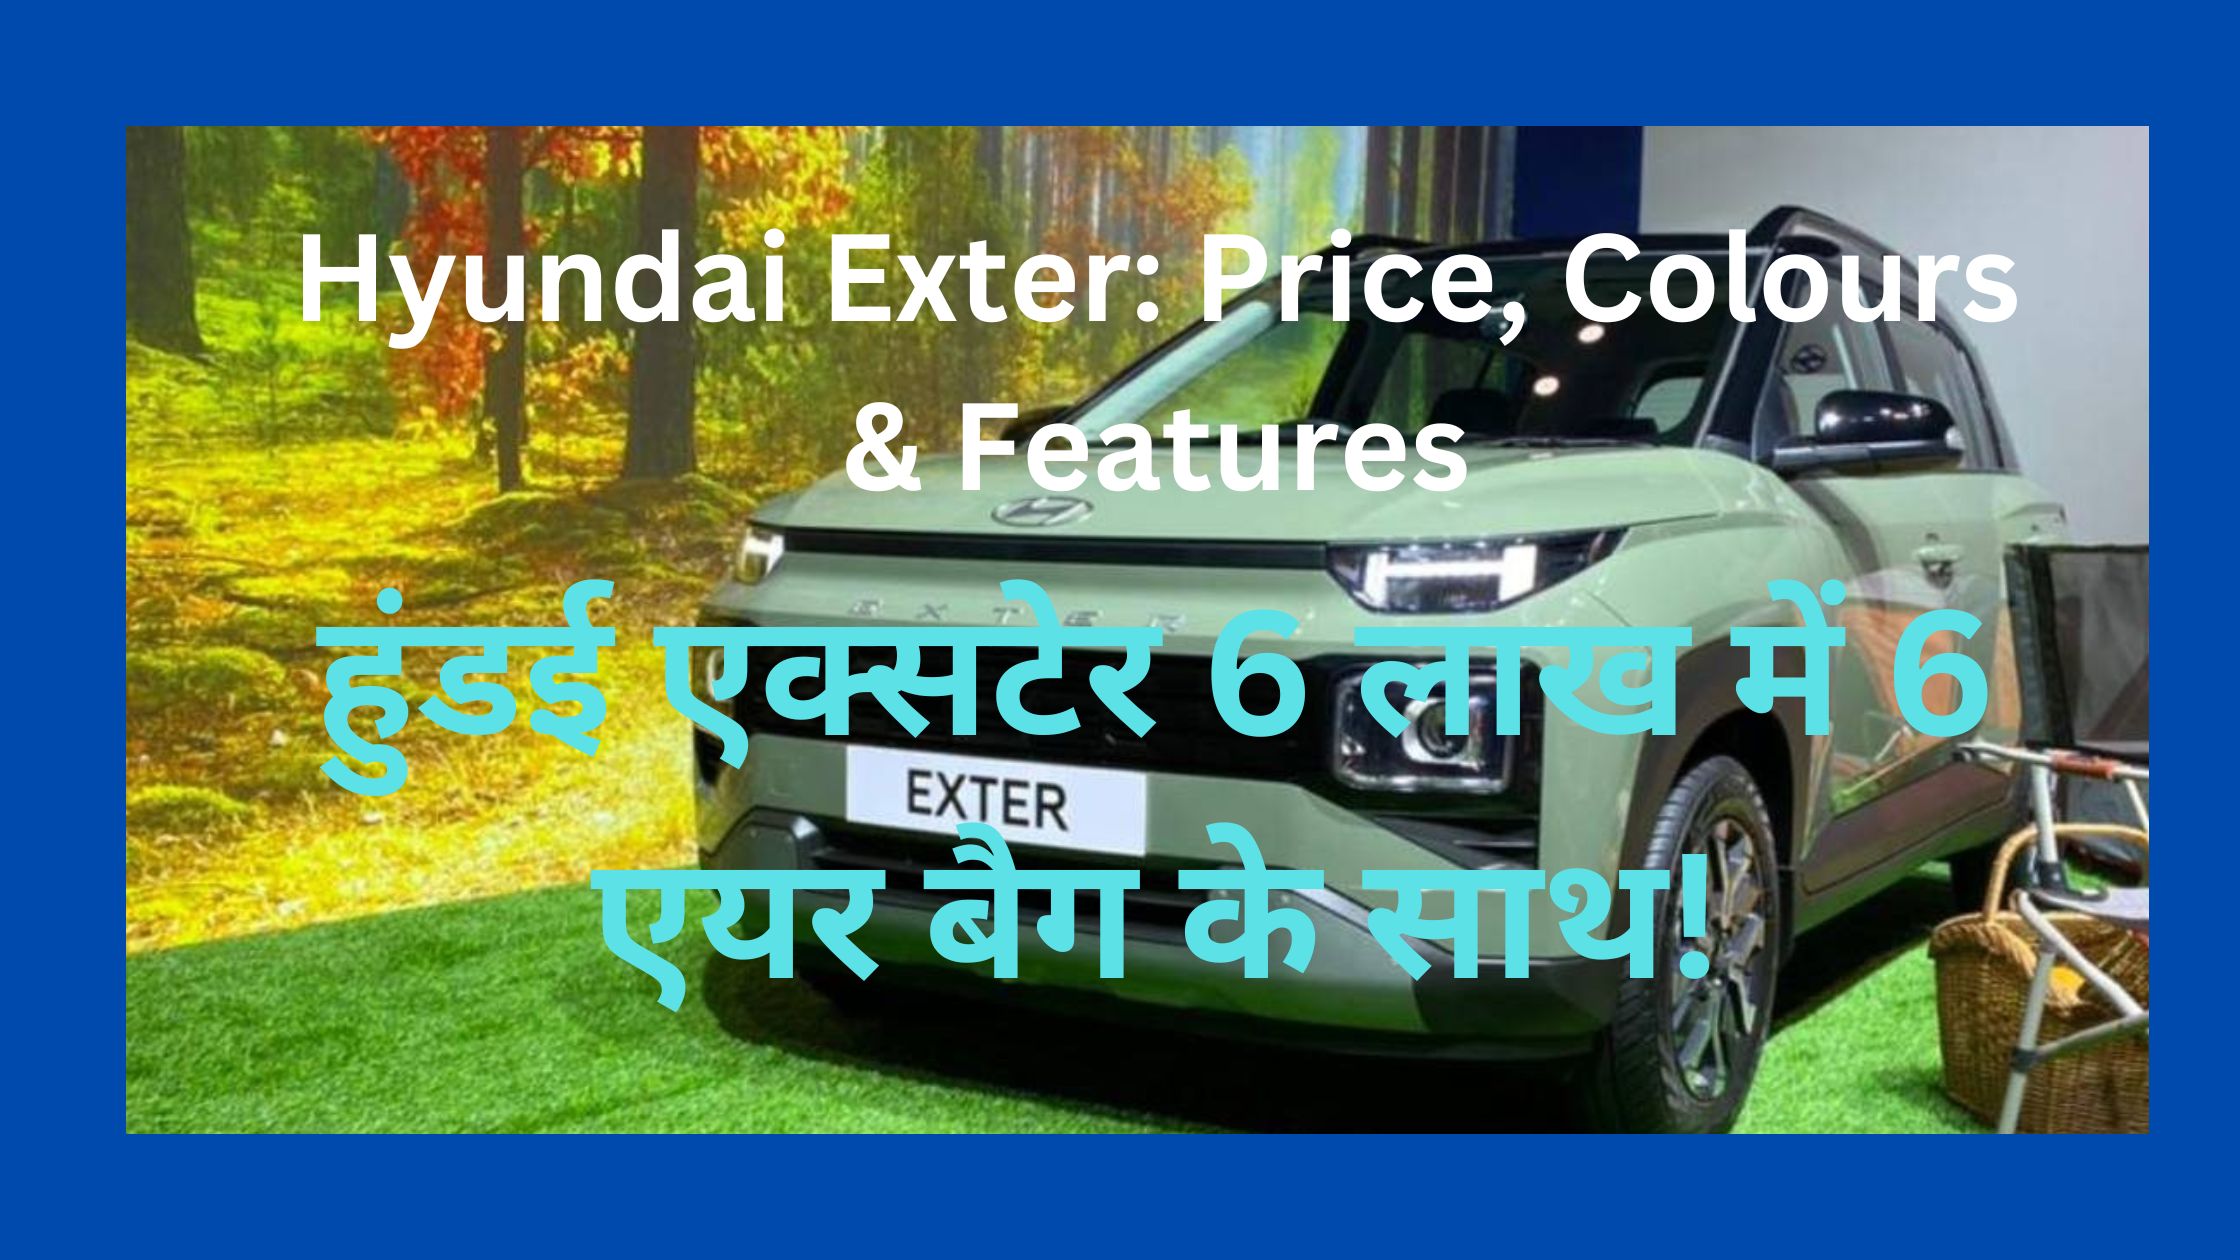 Hyundai Exter Price, Colours & Features